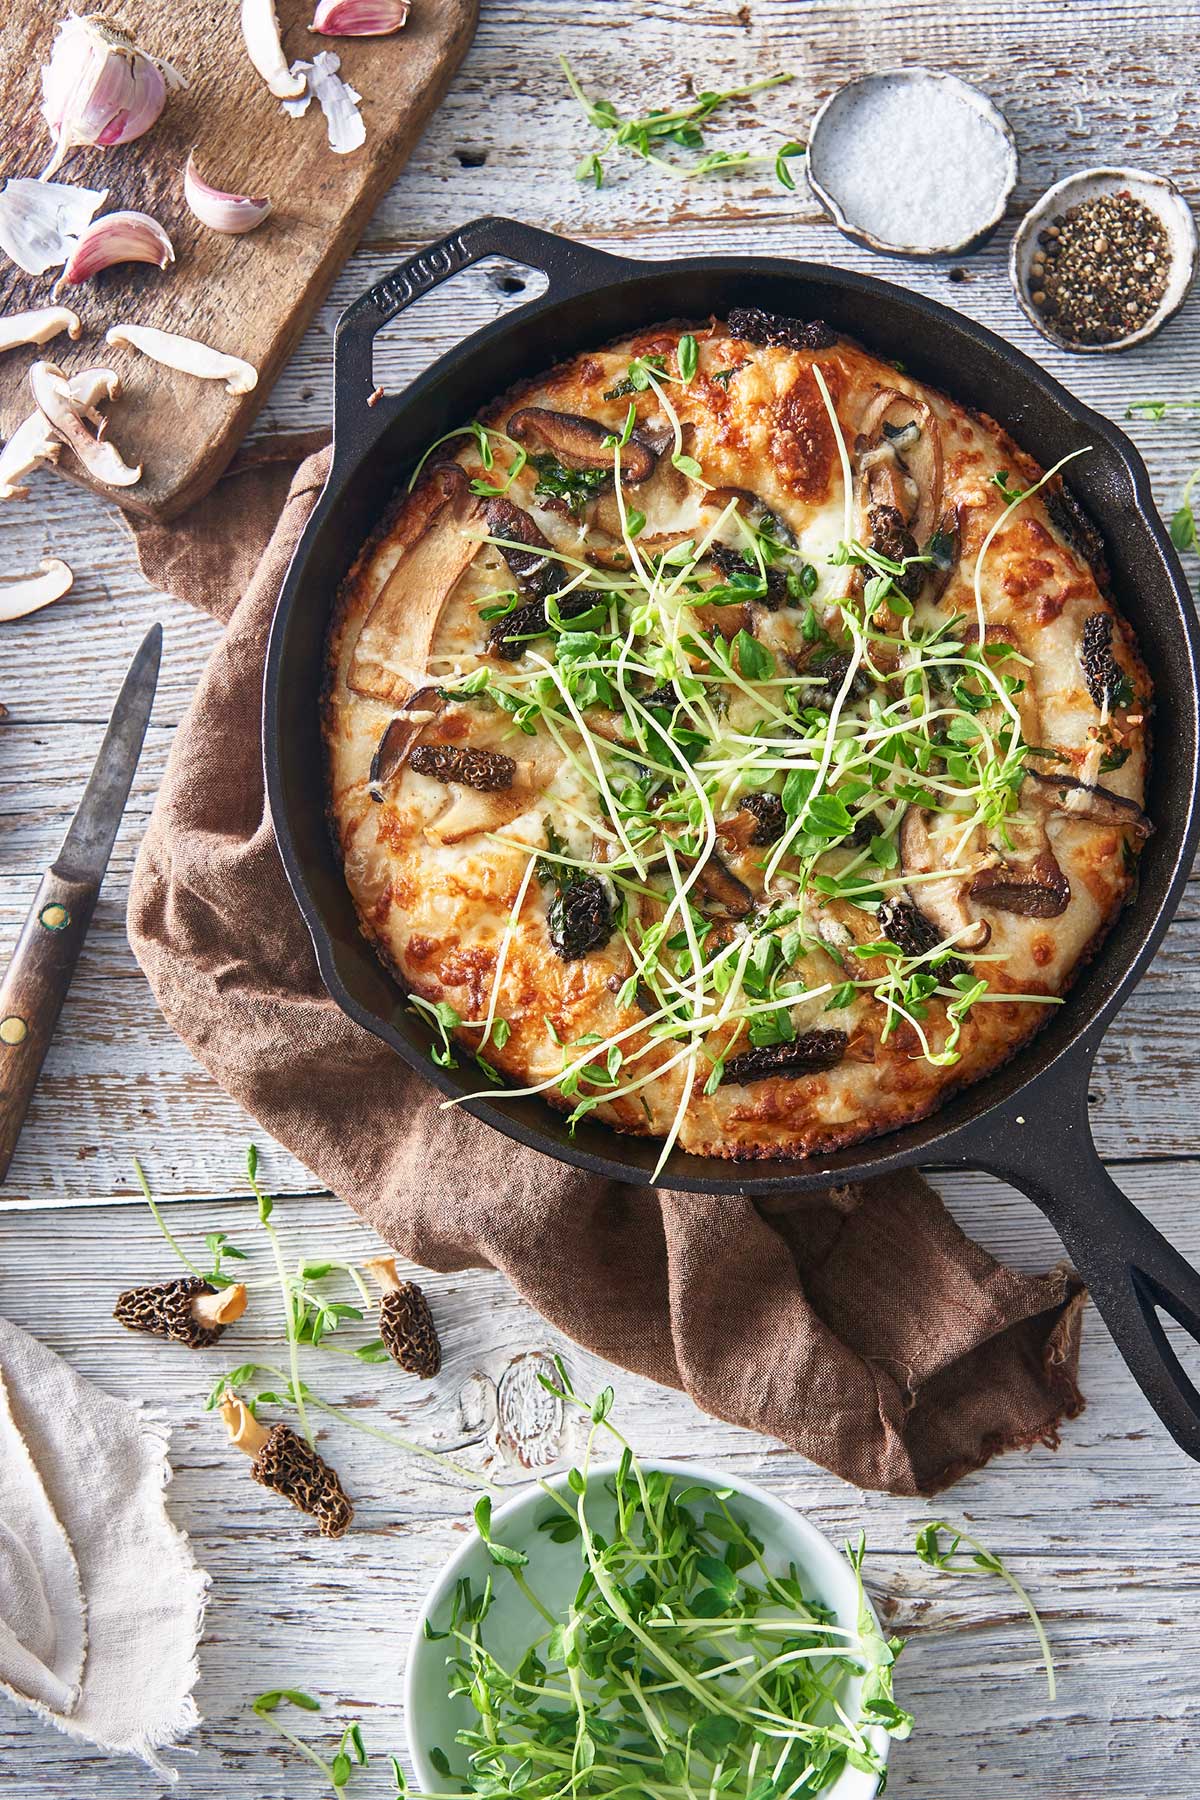 Crispy cheesy pan pizza with wild mushrooms, Fontina cheese, and pea shoots